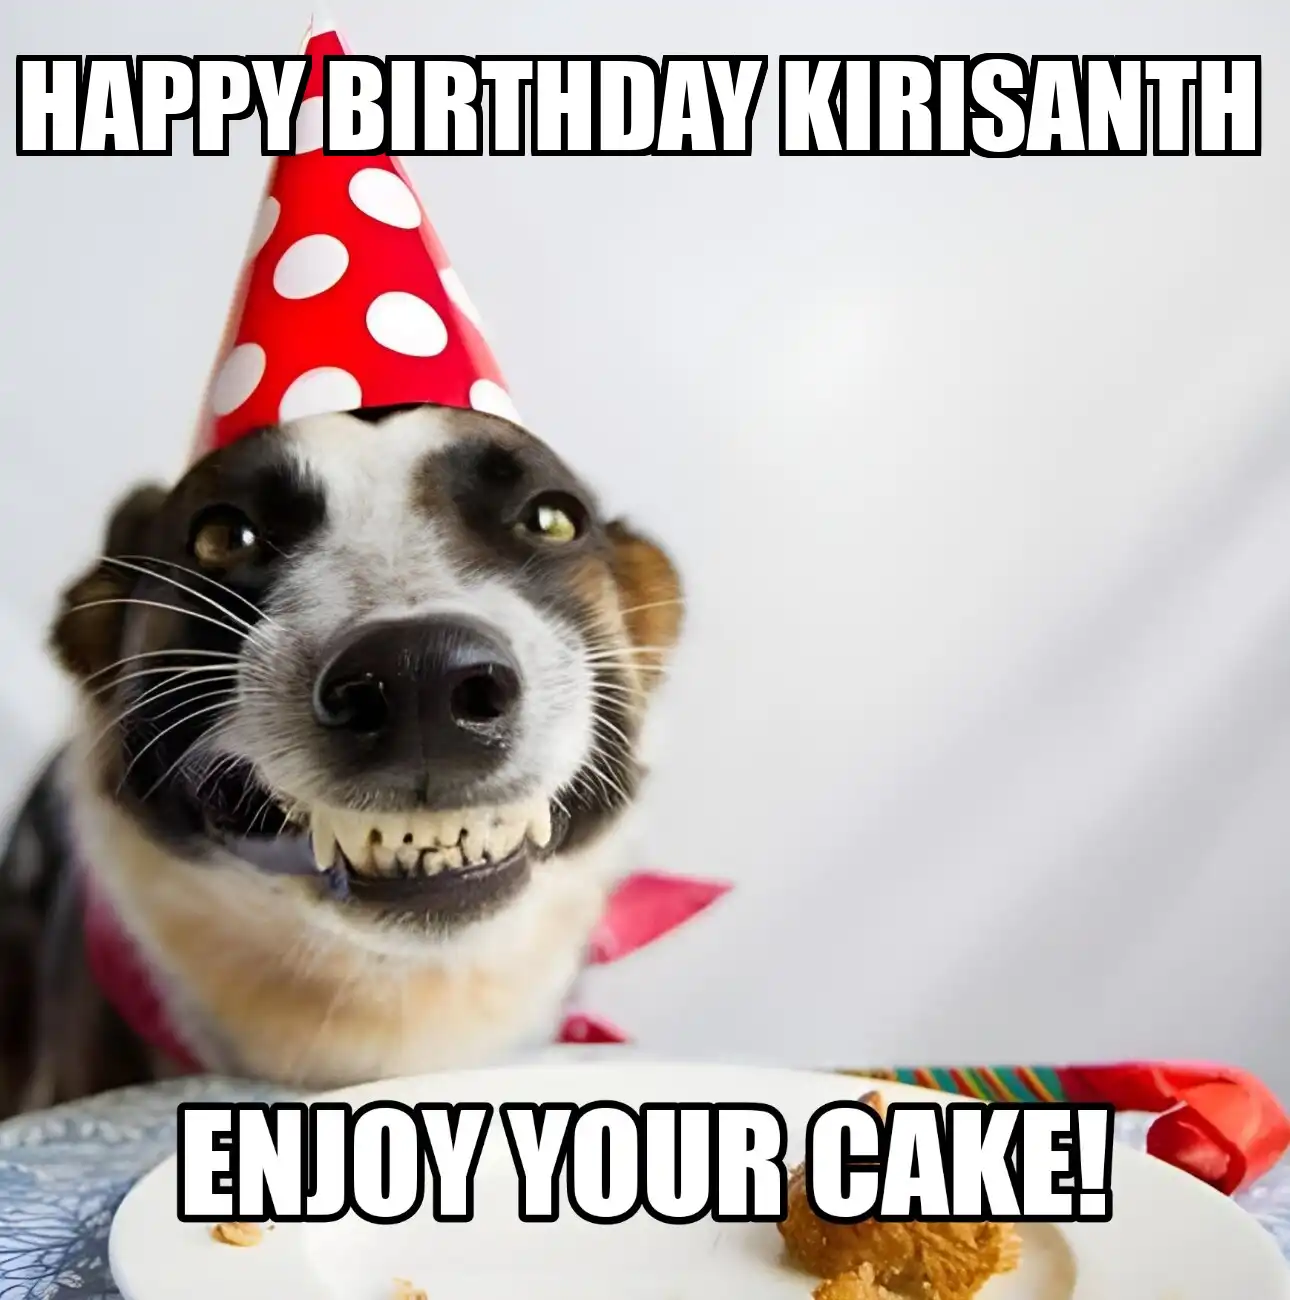 Happy Birthday Kirisanth Enjoy Your Cake Dog Meme